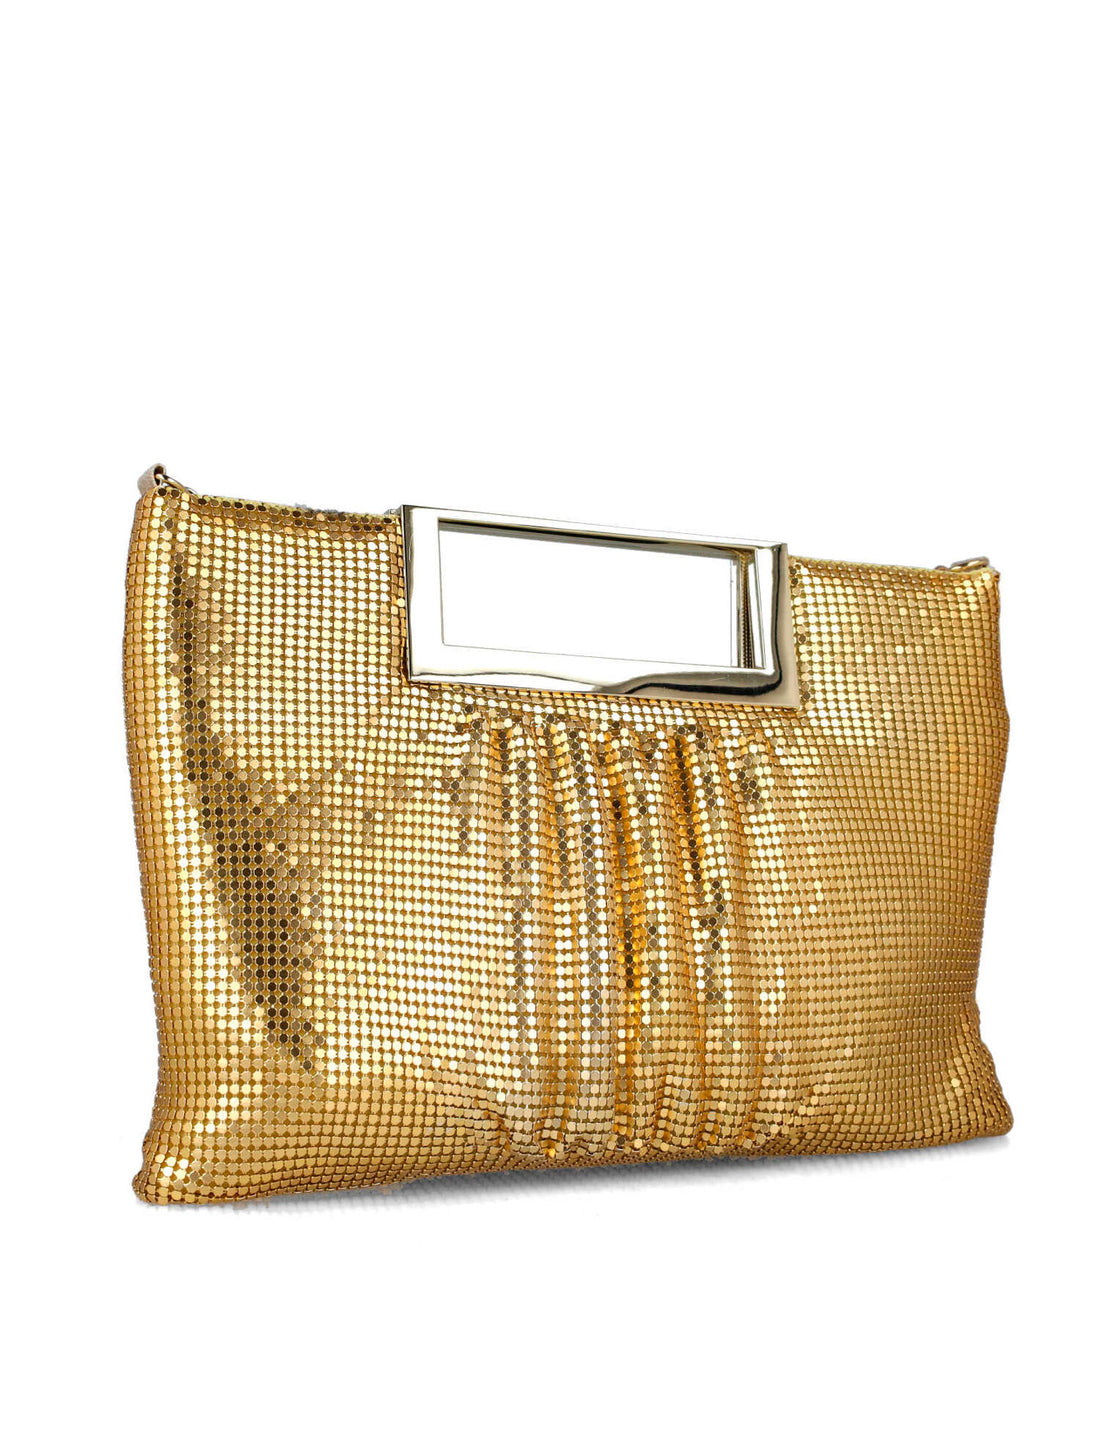 Gold Puffy Handbag With Metallic Handle_85560_00_02